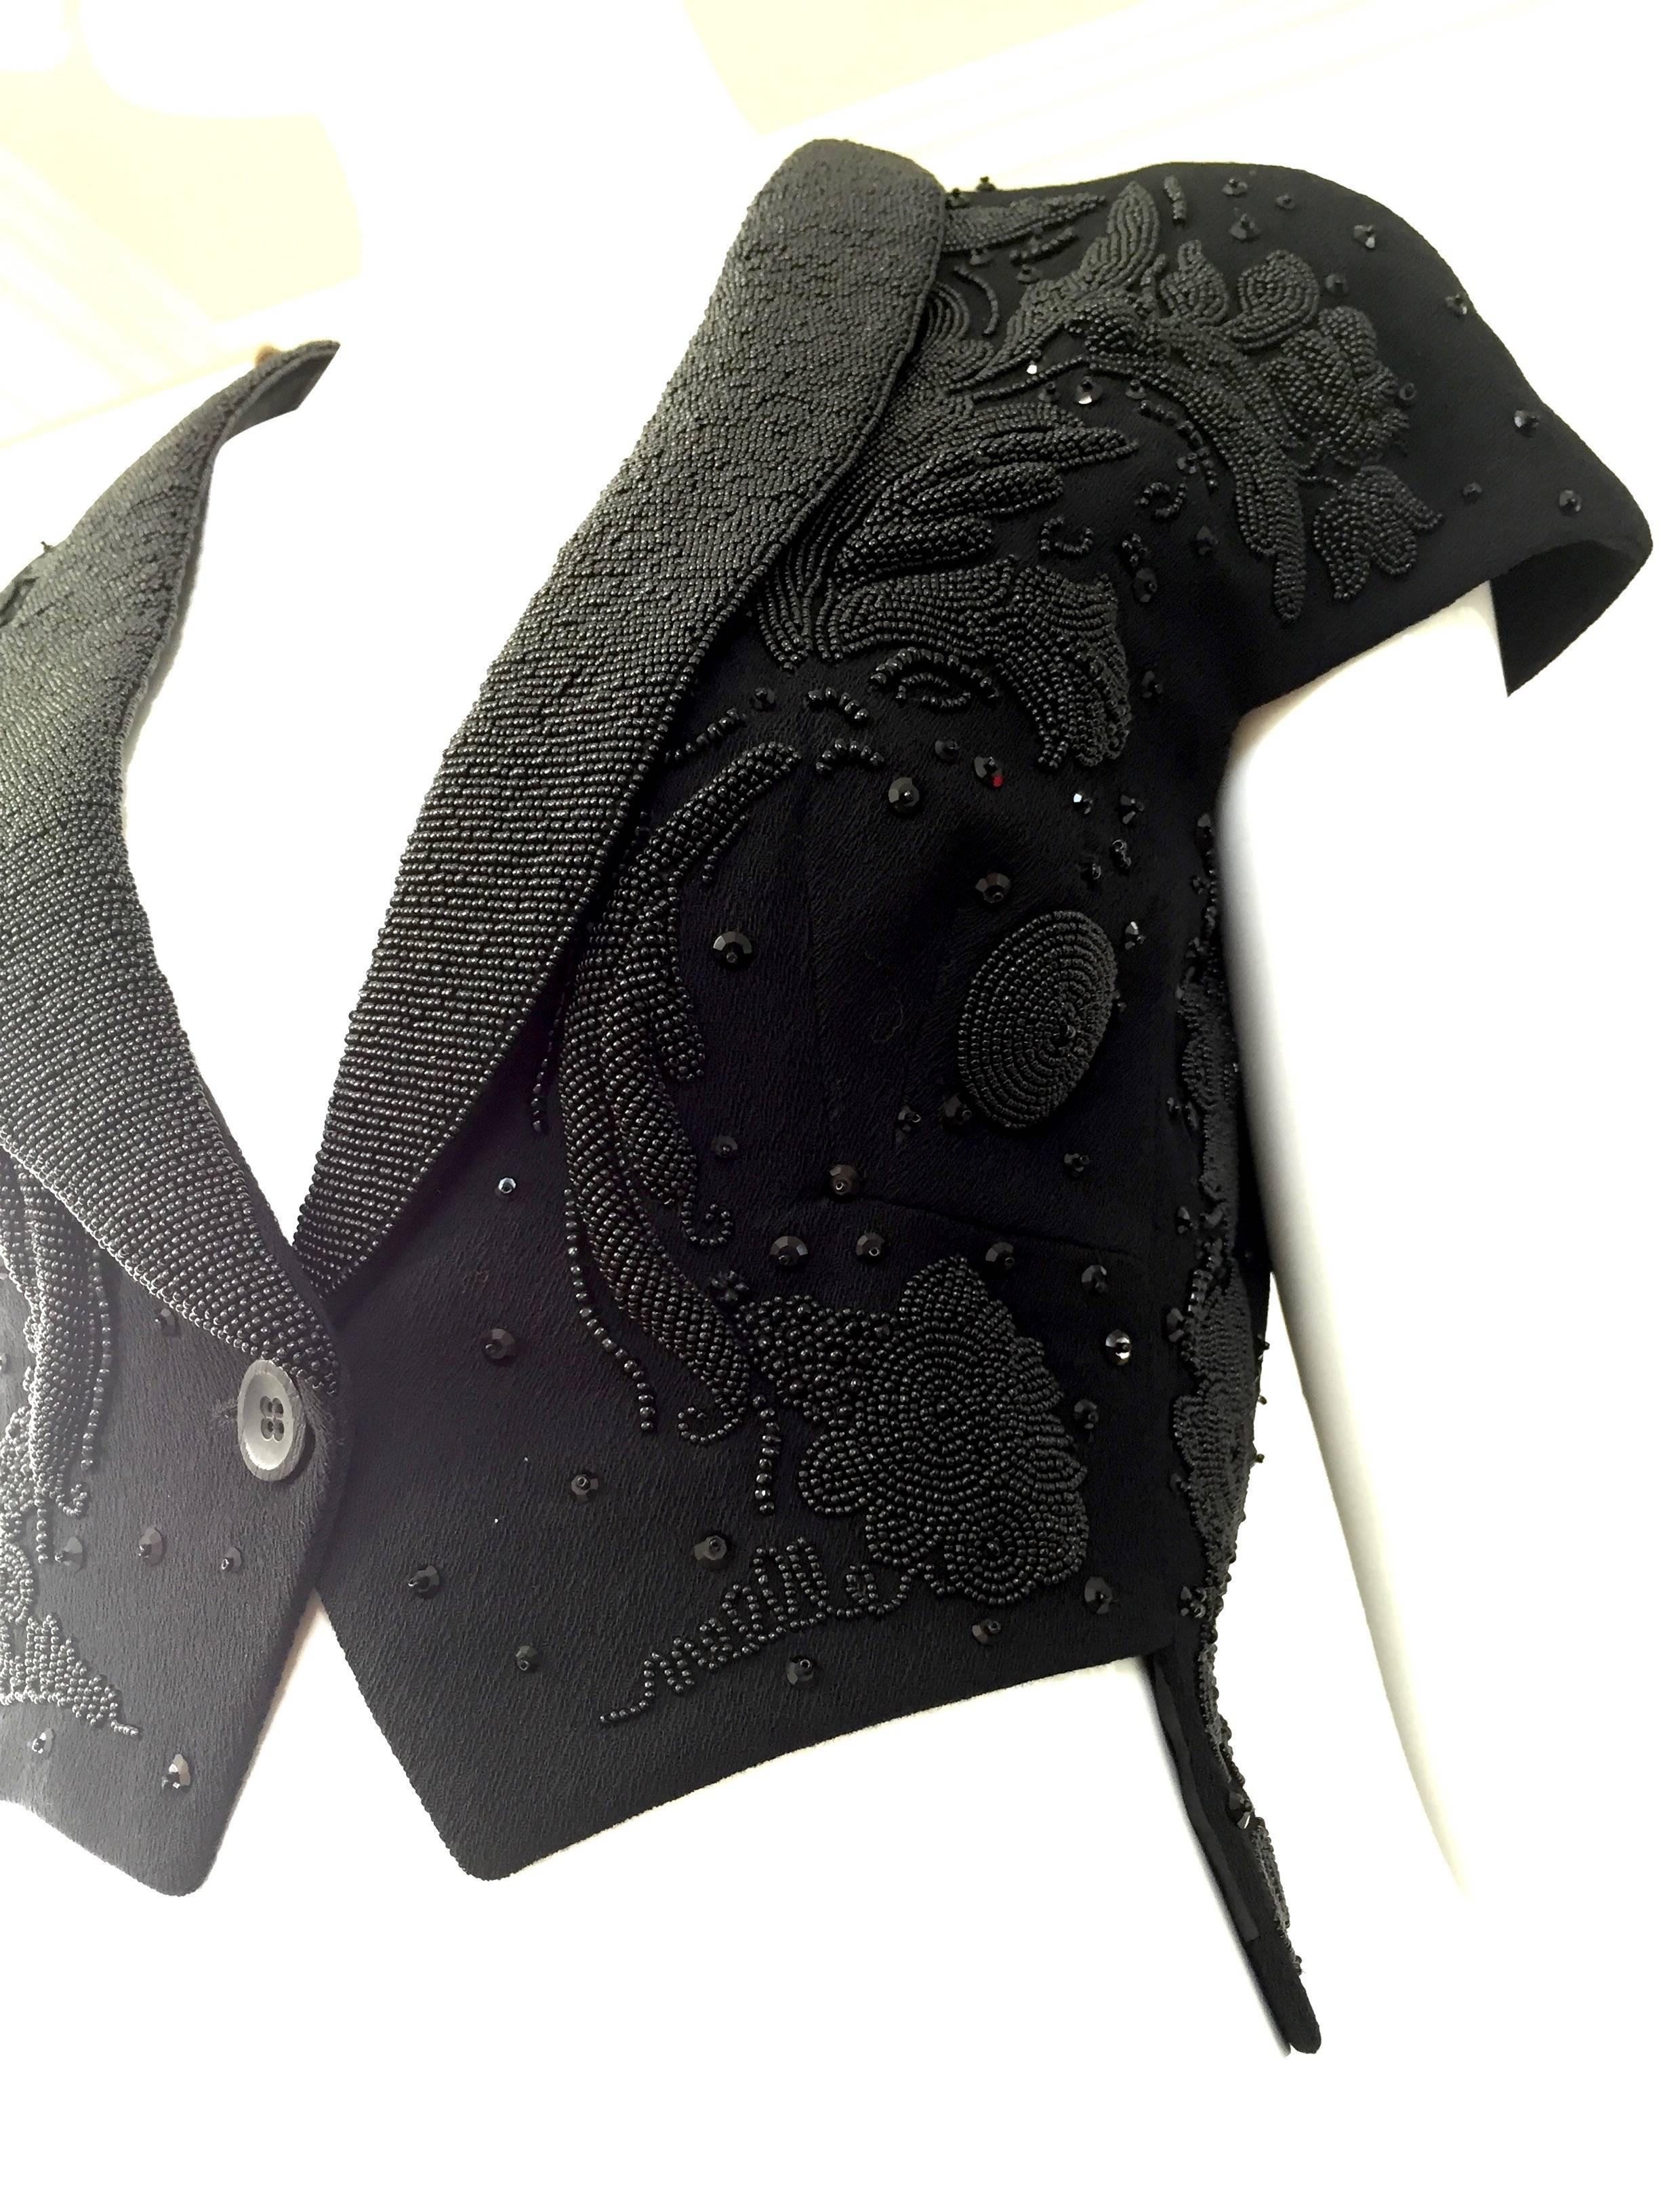 Jil Sander black beaded embroidered crop top-Jacket.
lined in silk
Bust: 34